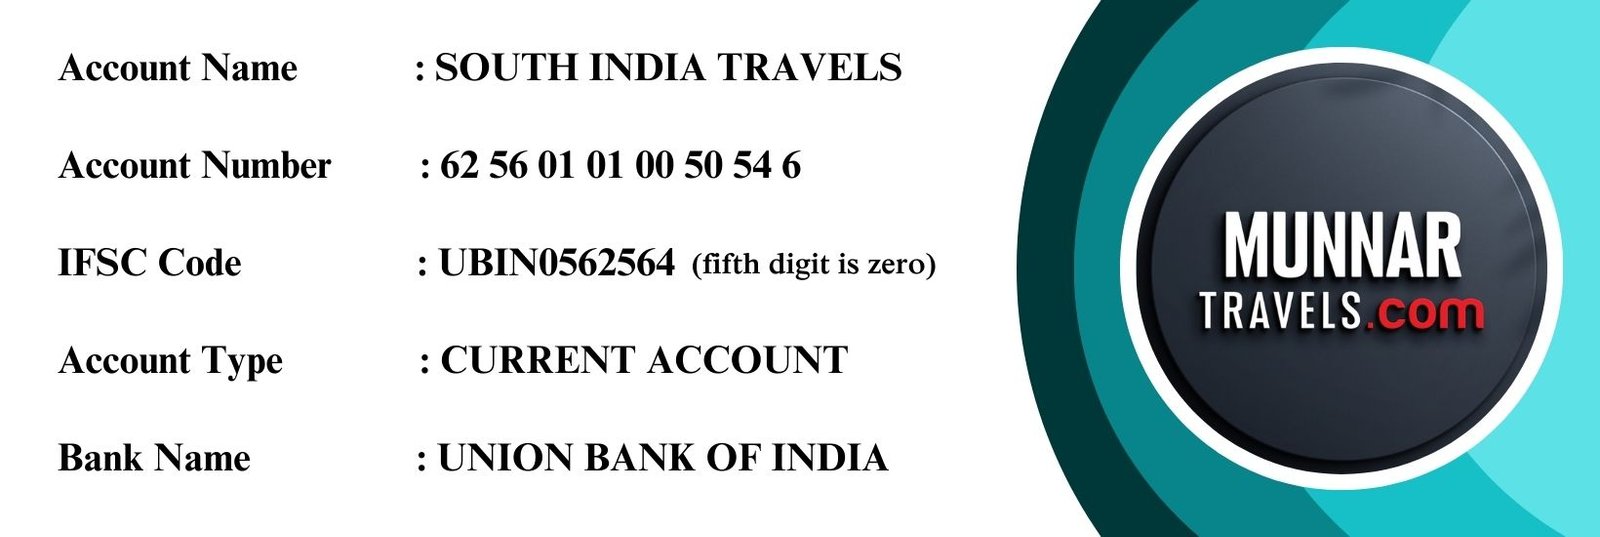 Munnar Travels Banking Details